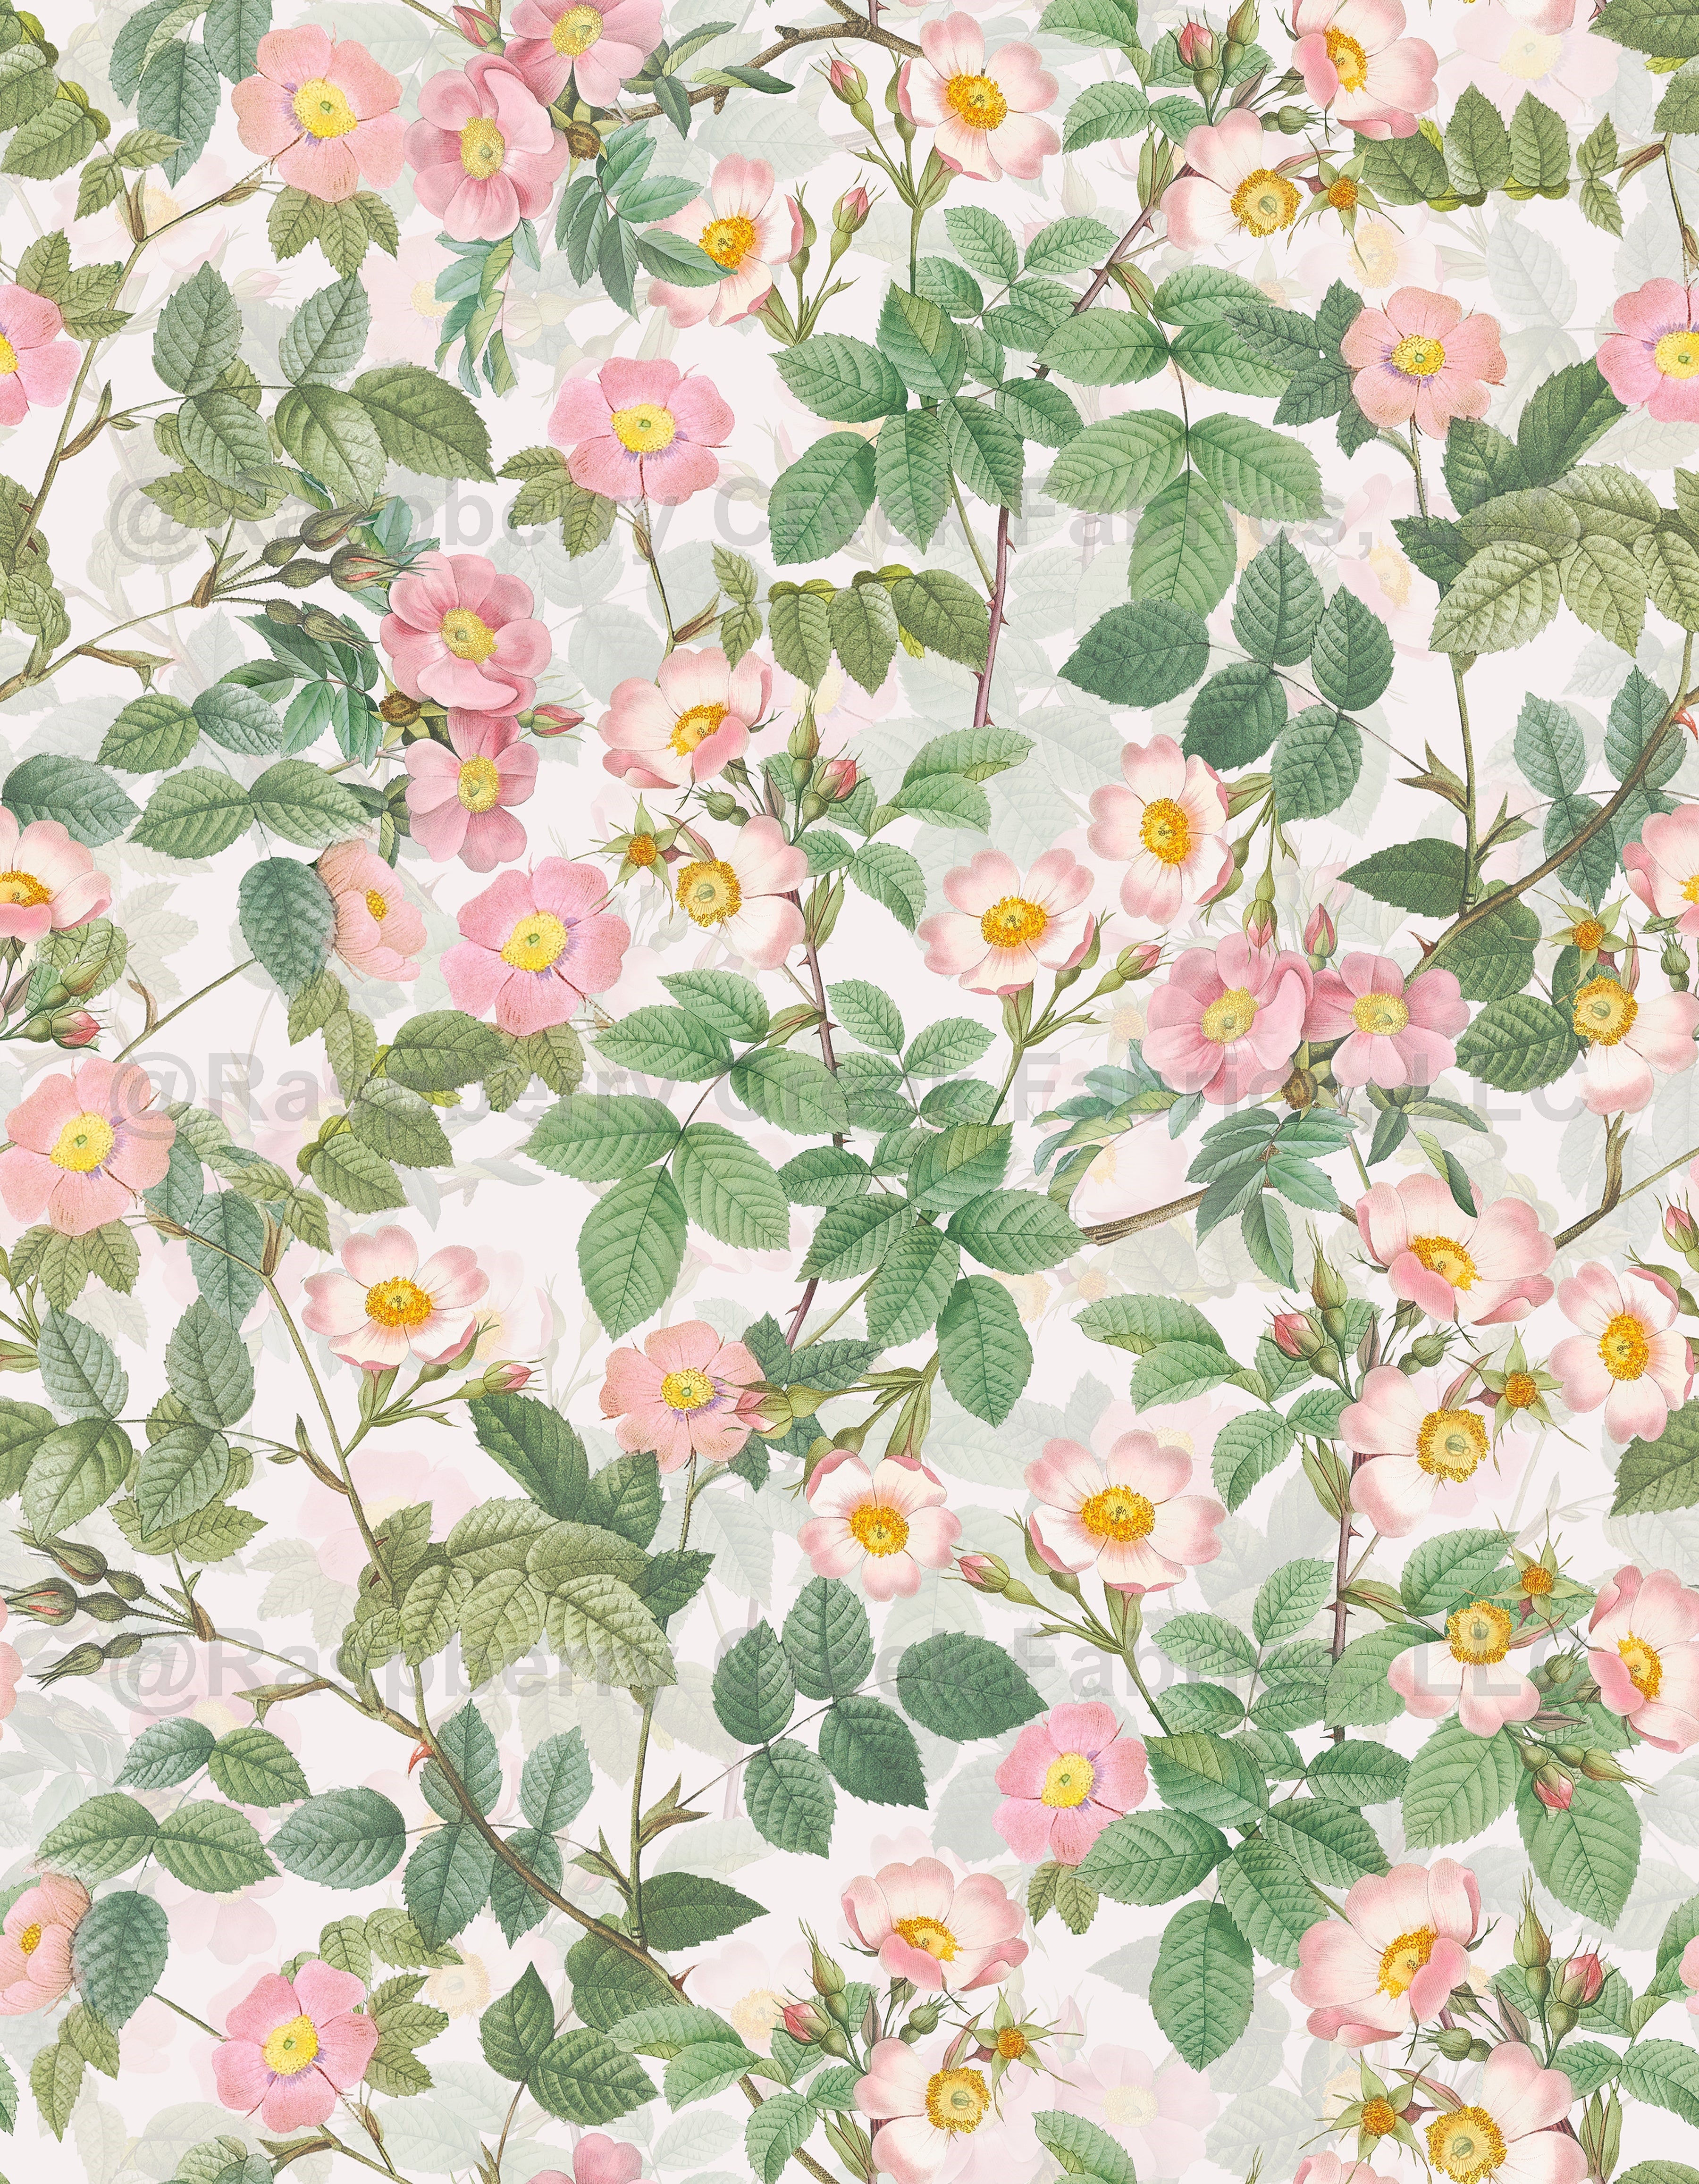 Antique Blush Redouté Dog Roses 1 Wallpaper, Raspberry Creek Fabrics, watermarked